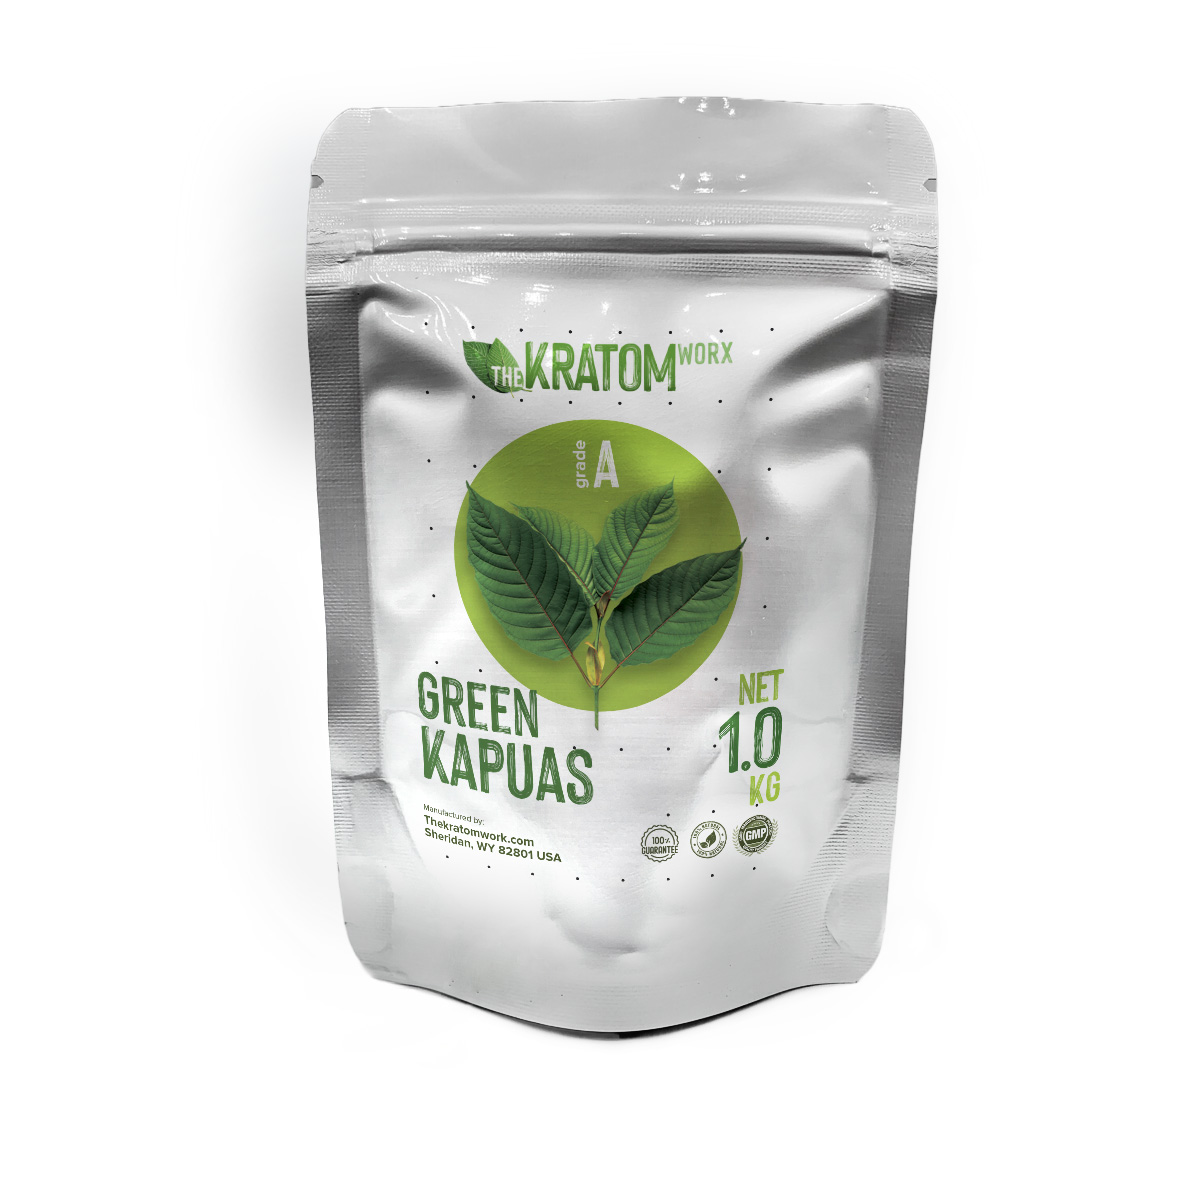 Green-Kapuas-Powder-1.0kg